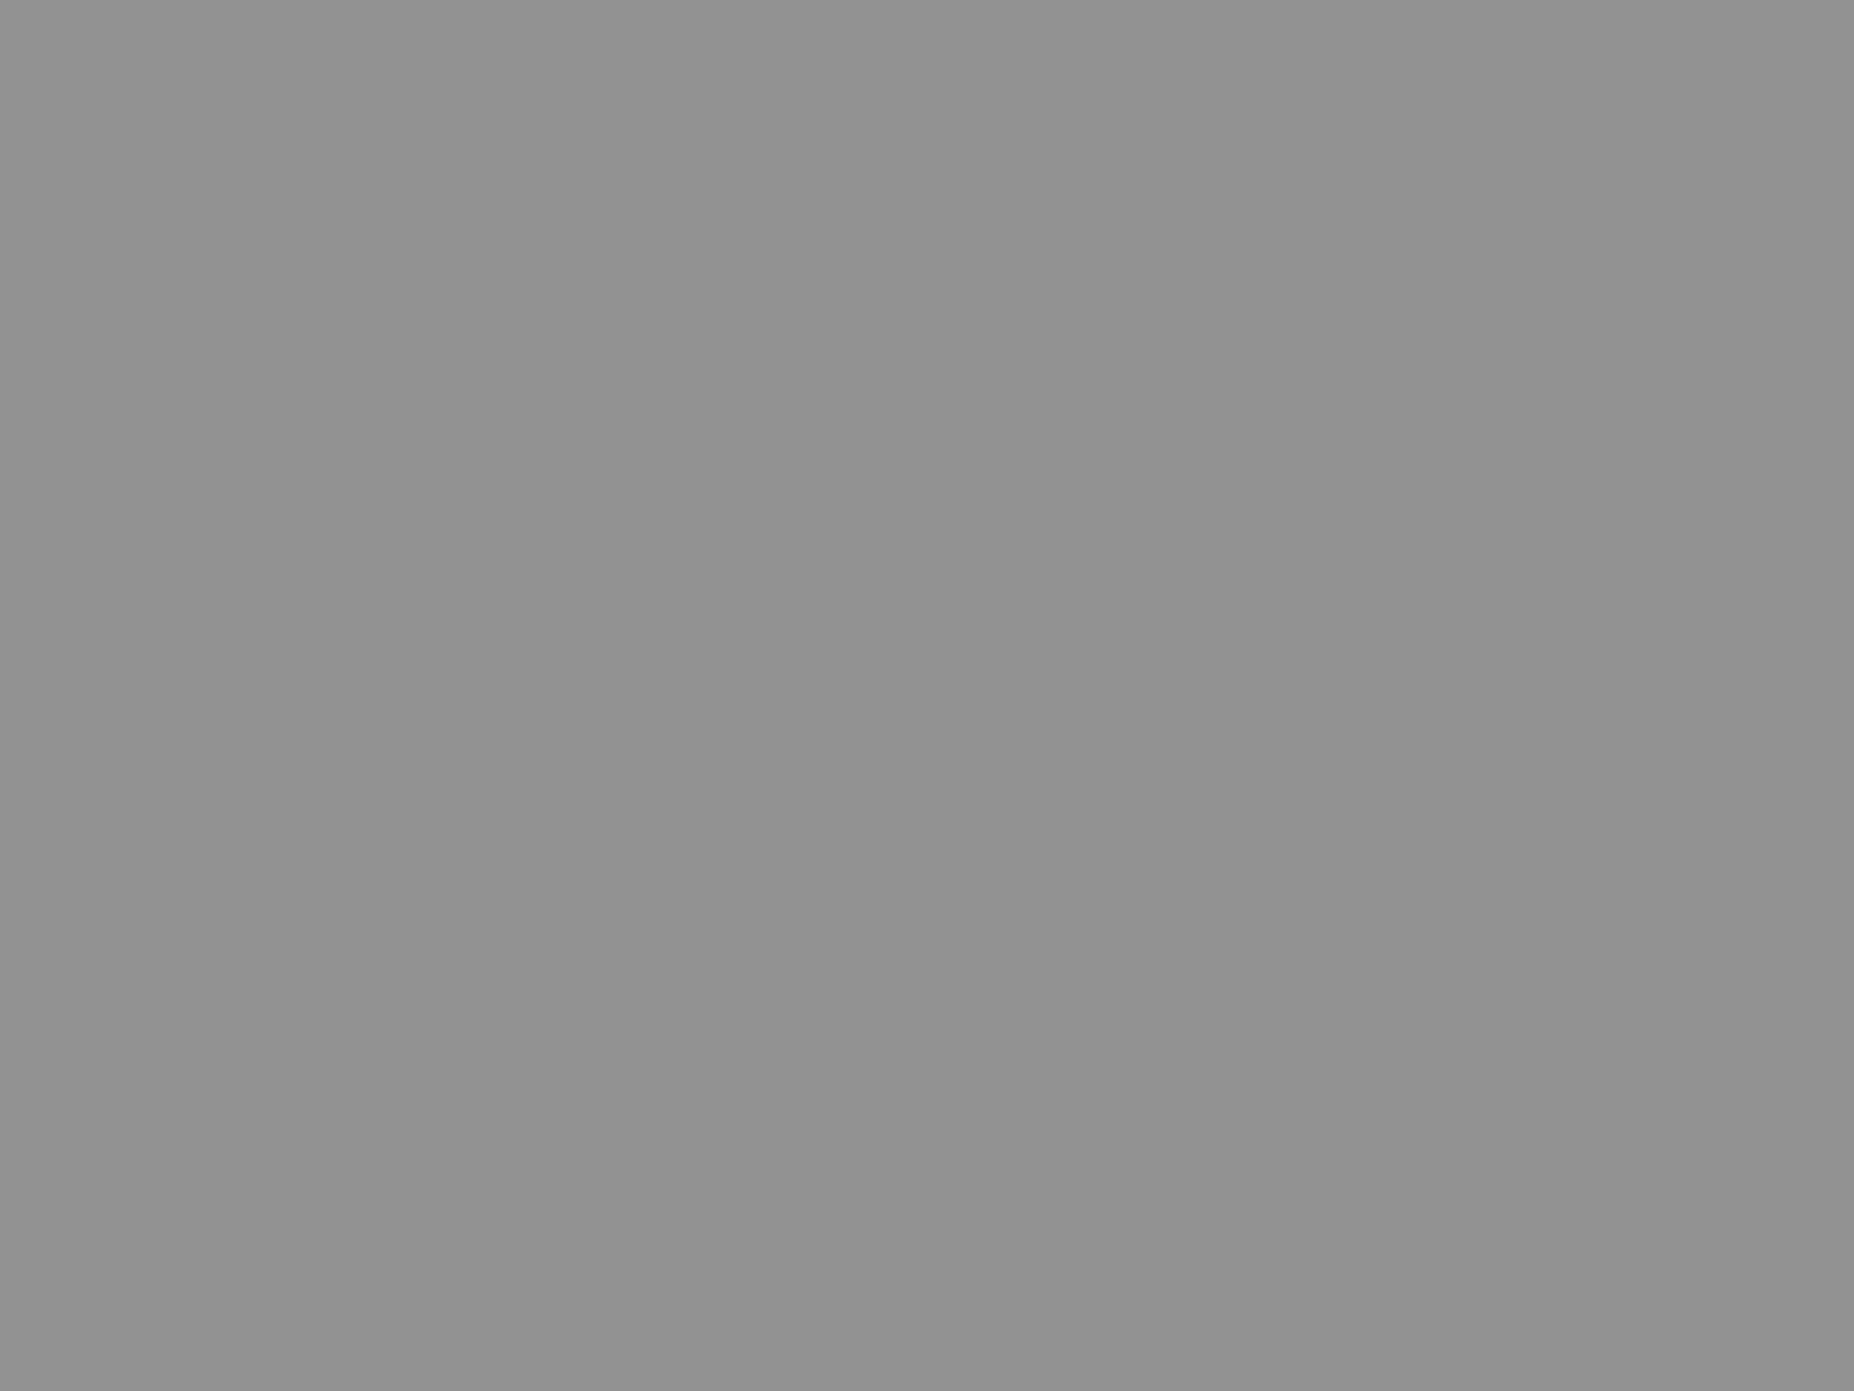 Доходный дом церкви Троицы на Грязех («Дом со зверями», Дом Вашкова). 1911 год. Фотография: <a href="https://commons.wikimedia.org/wiki/File:45932_Дом_со_зверями_-_доходный_дом_церкви_св._Троицы_Живоначальной,_что_на_Грязех_(cropped).jpg" target="_blank" rel="noopener">Wikimedia Commons</a> / <a href="https://creativecommons.org/publicdomain/mark/1.0/" target="_blank" rel="noopener">Public domain</a>